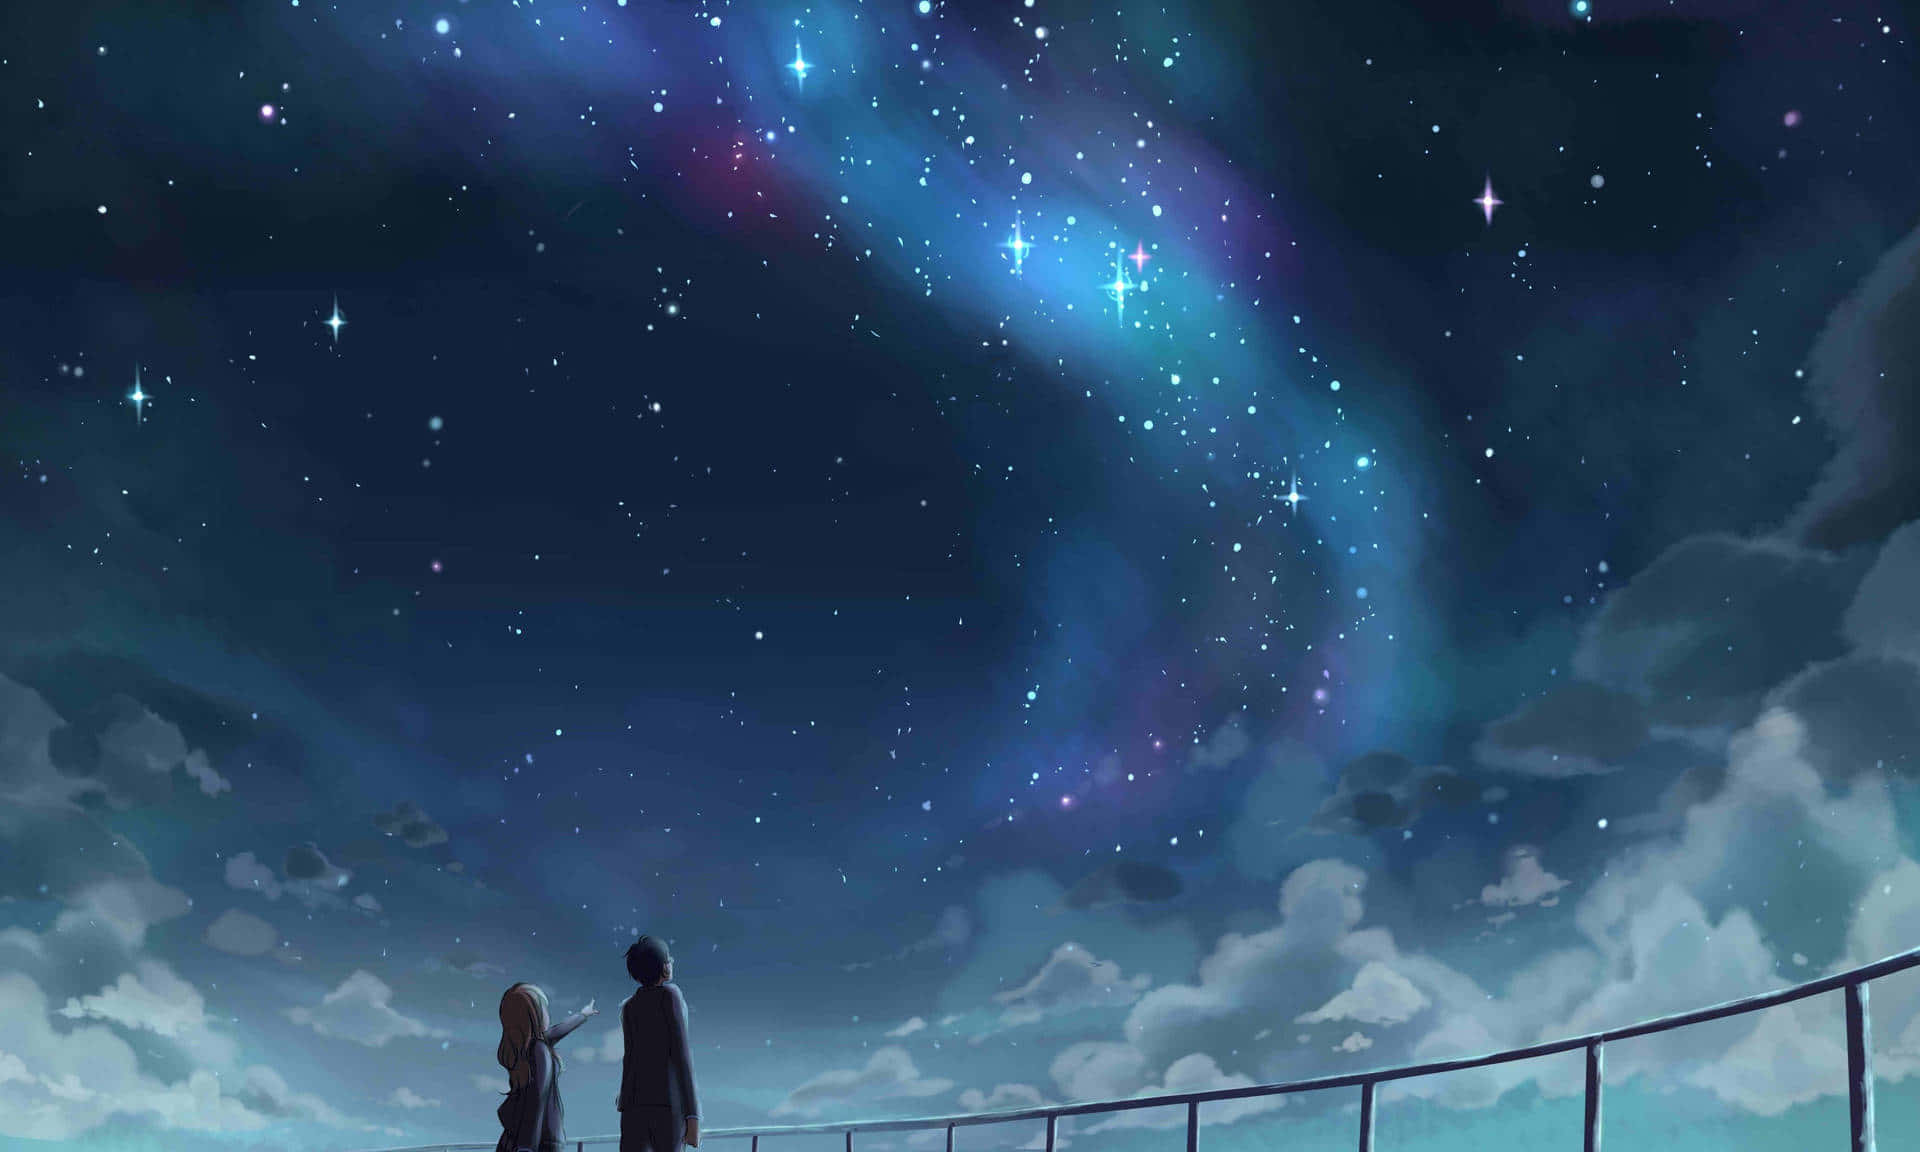 Beautiful Anime Scenery wallpaper in 360x720 resolution